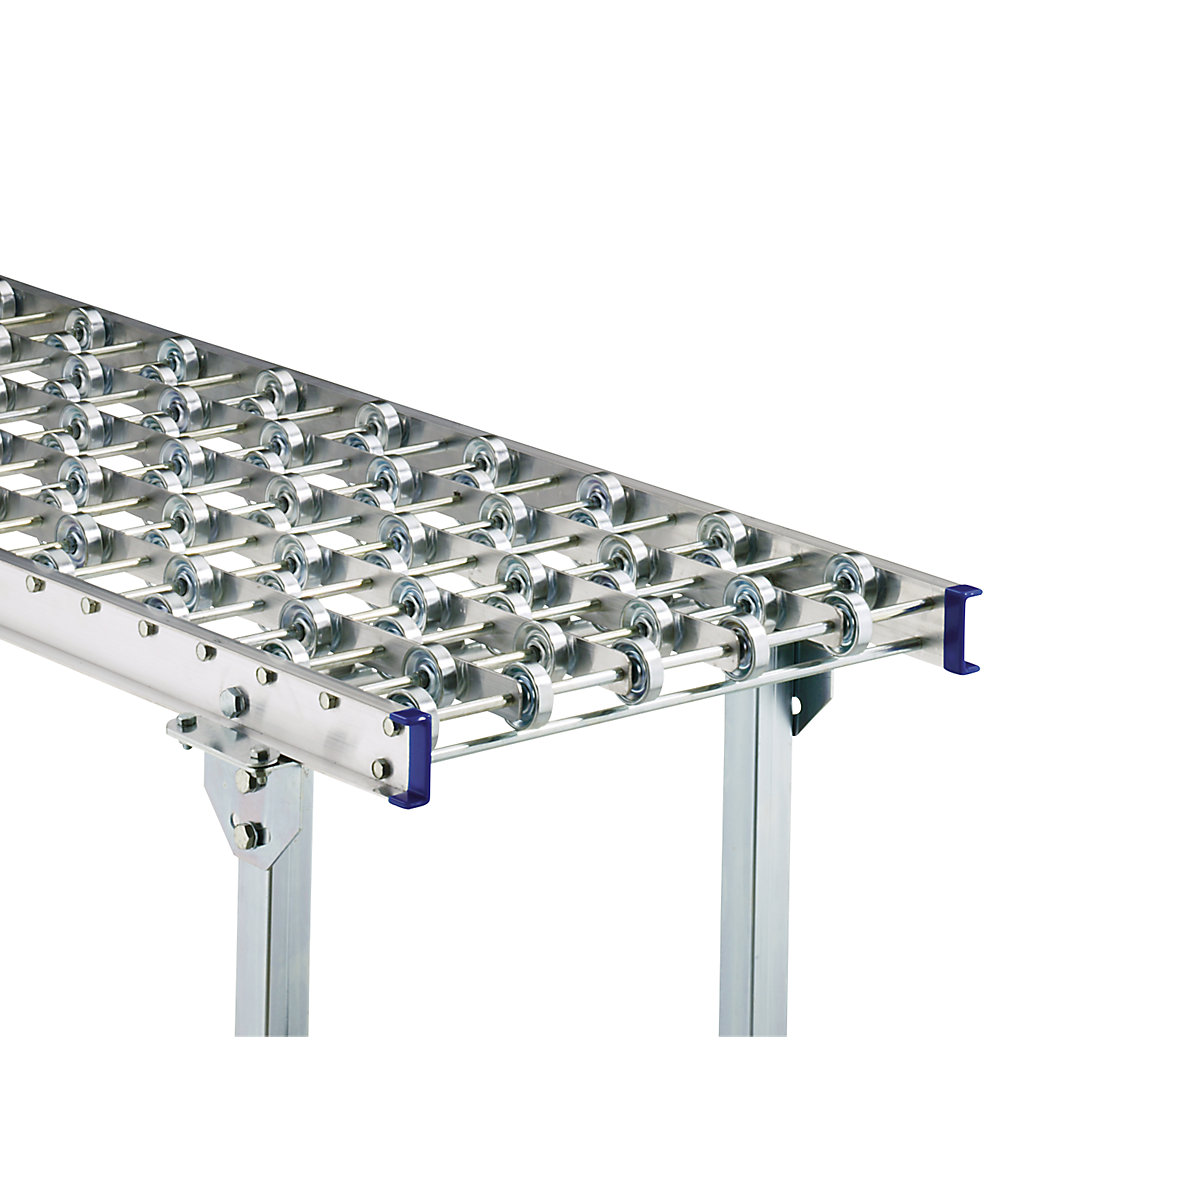 Gura – Light duty skate wheel conveyor, aluminium frame with zinc plated steel skate wheels